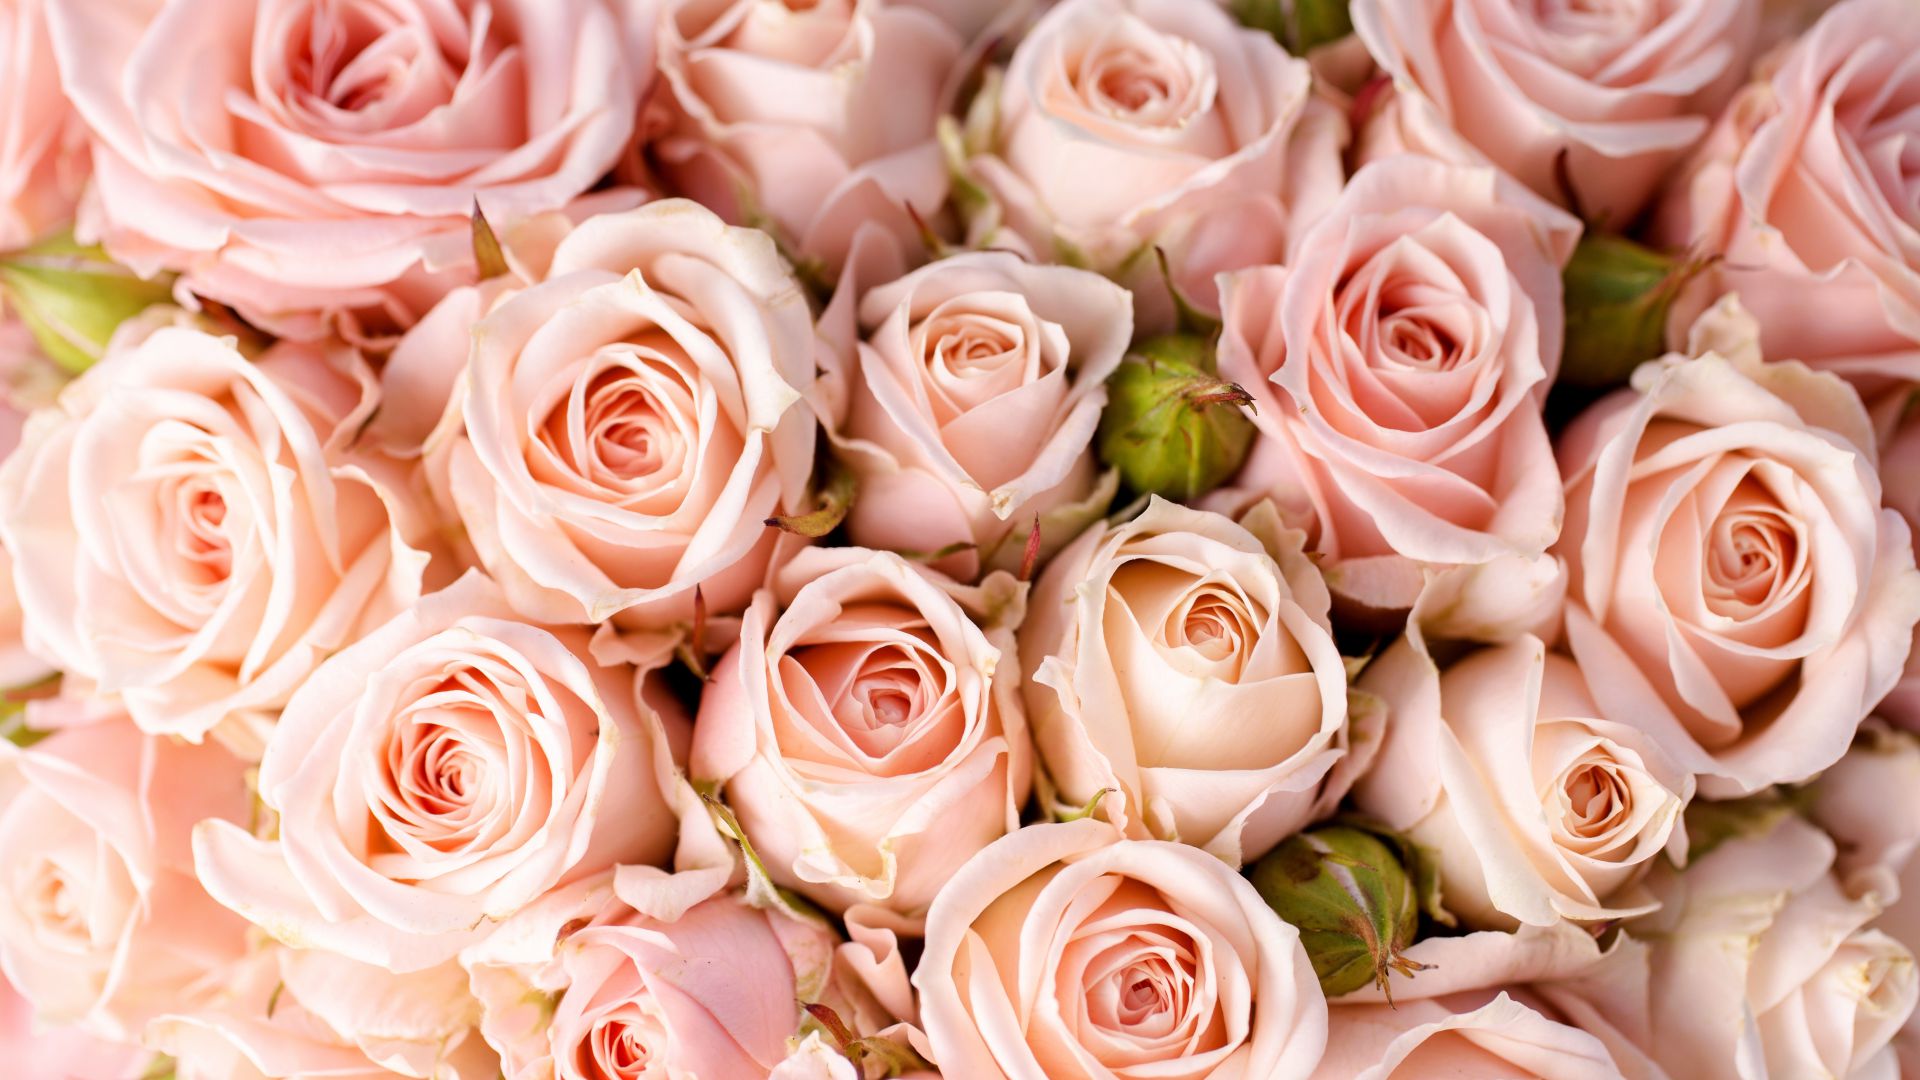 Roses, 5k, 4k wallpaper, 8k, flowers, pink (horizontal)